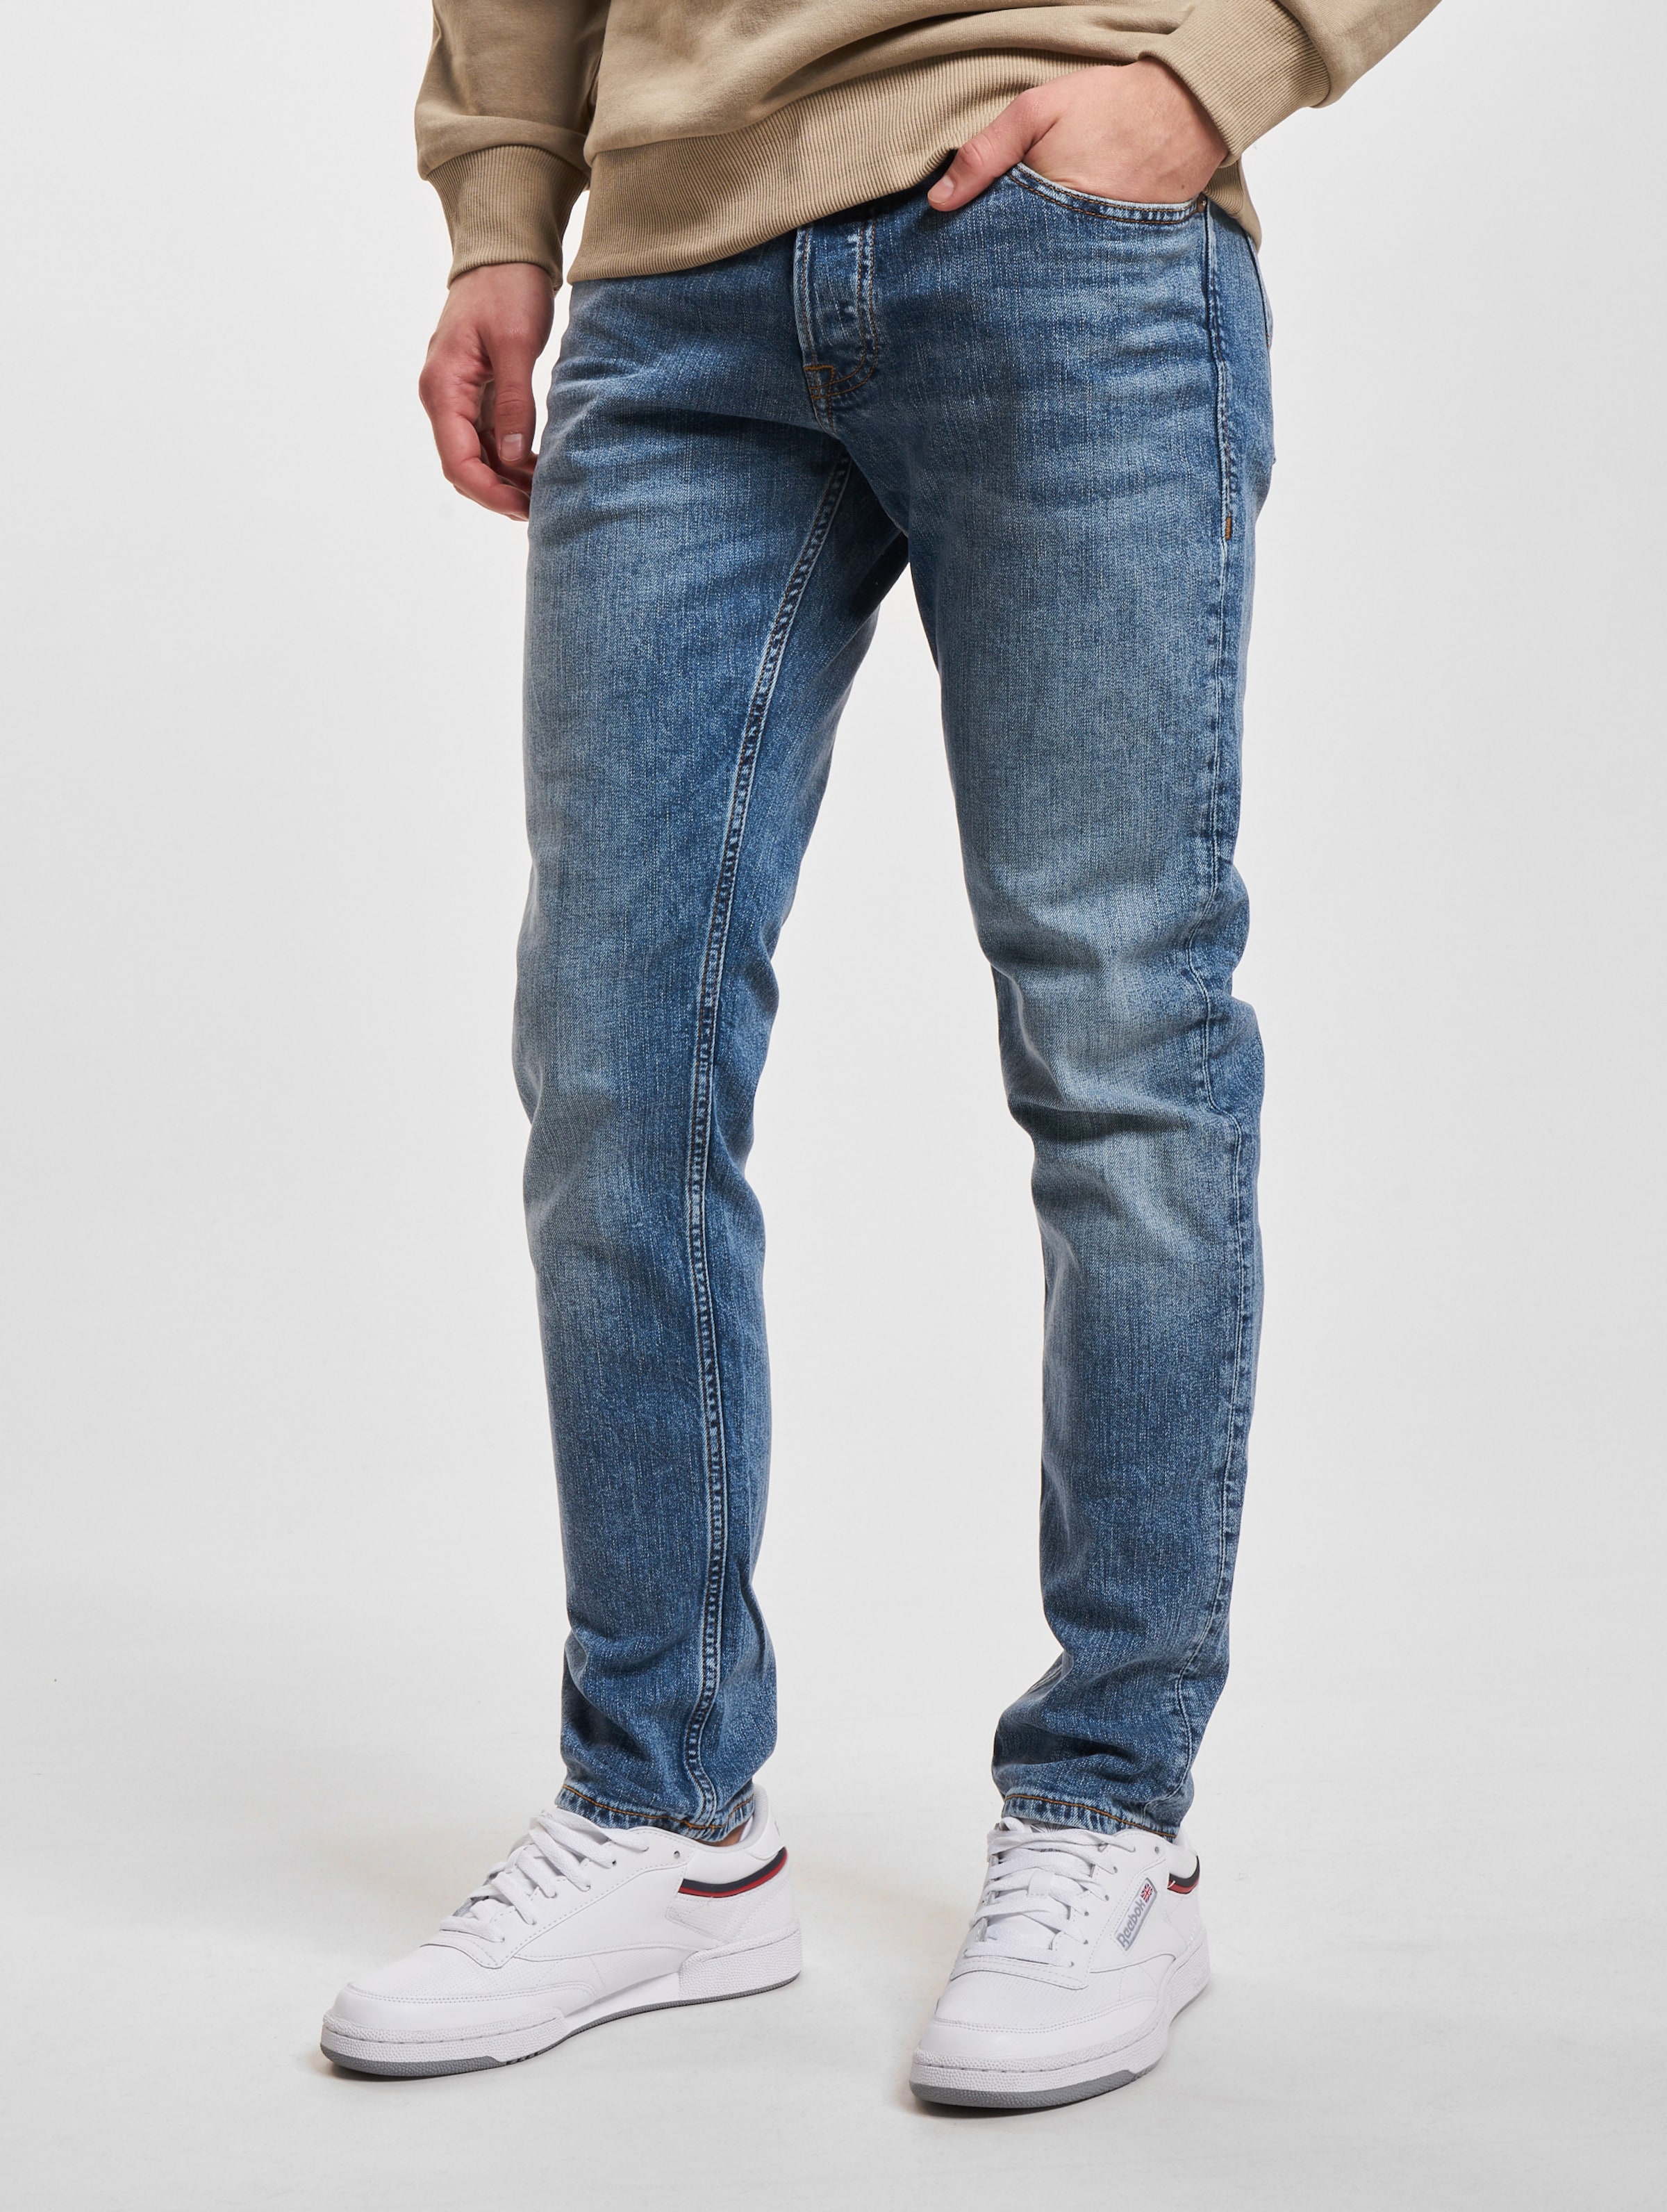 Jack & Jones Glenn Original Skinny Fit Jeans Mannen op kleur blauw, Maat 3334